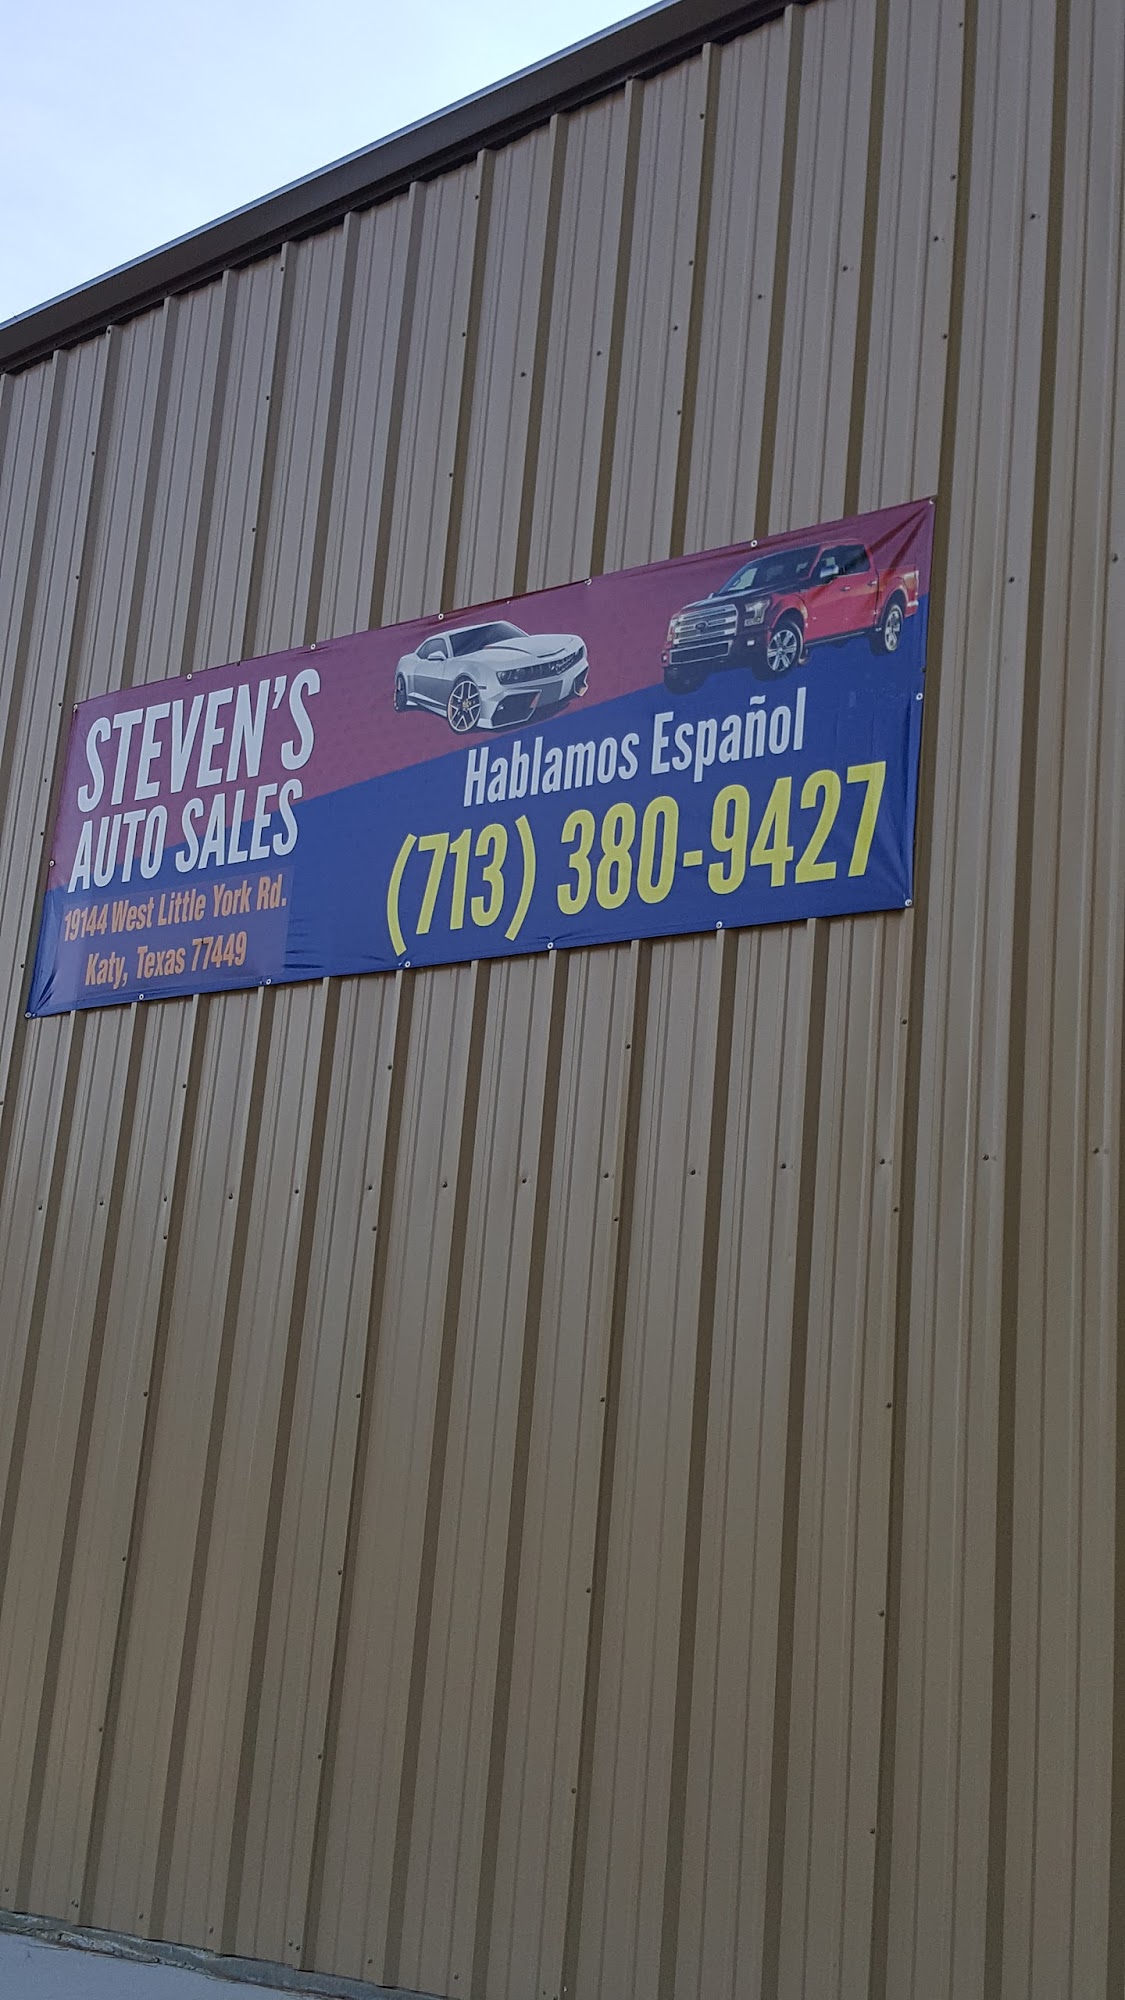 Steven's Auto Sales